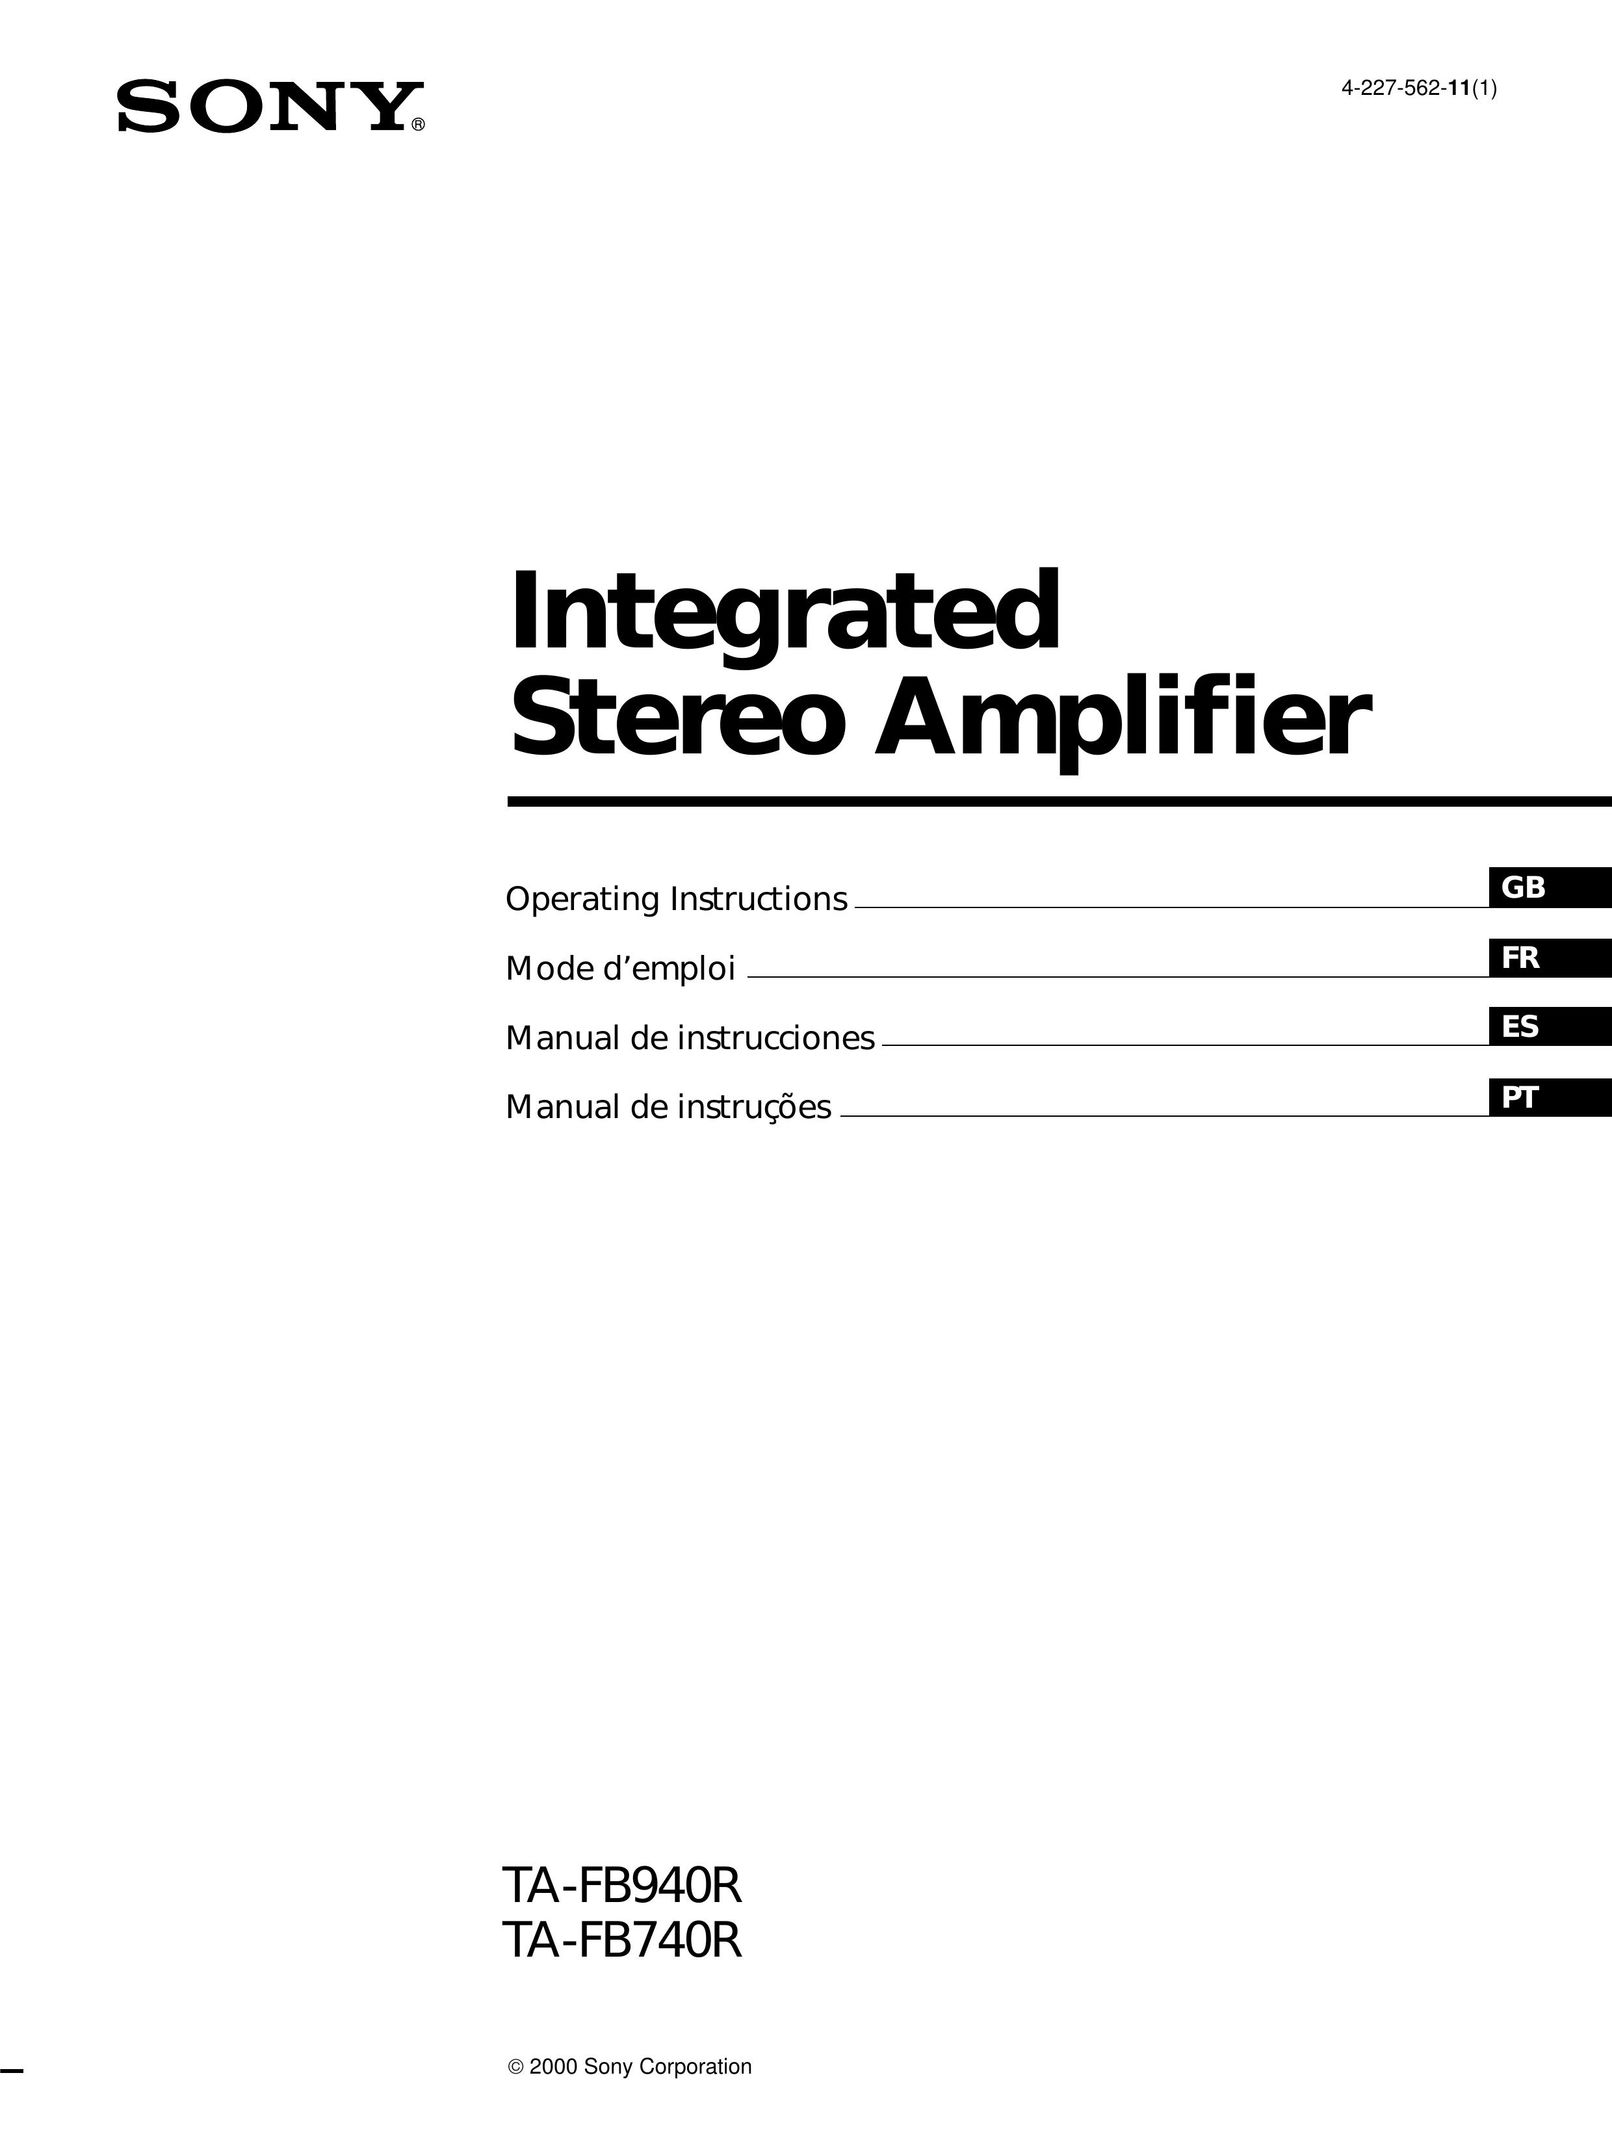 Sony TA-FB740R Stereo Amplifier User Manual